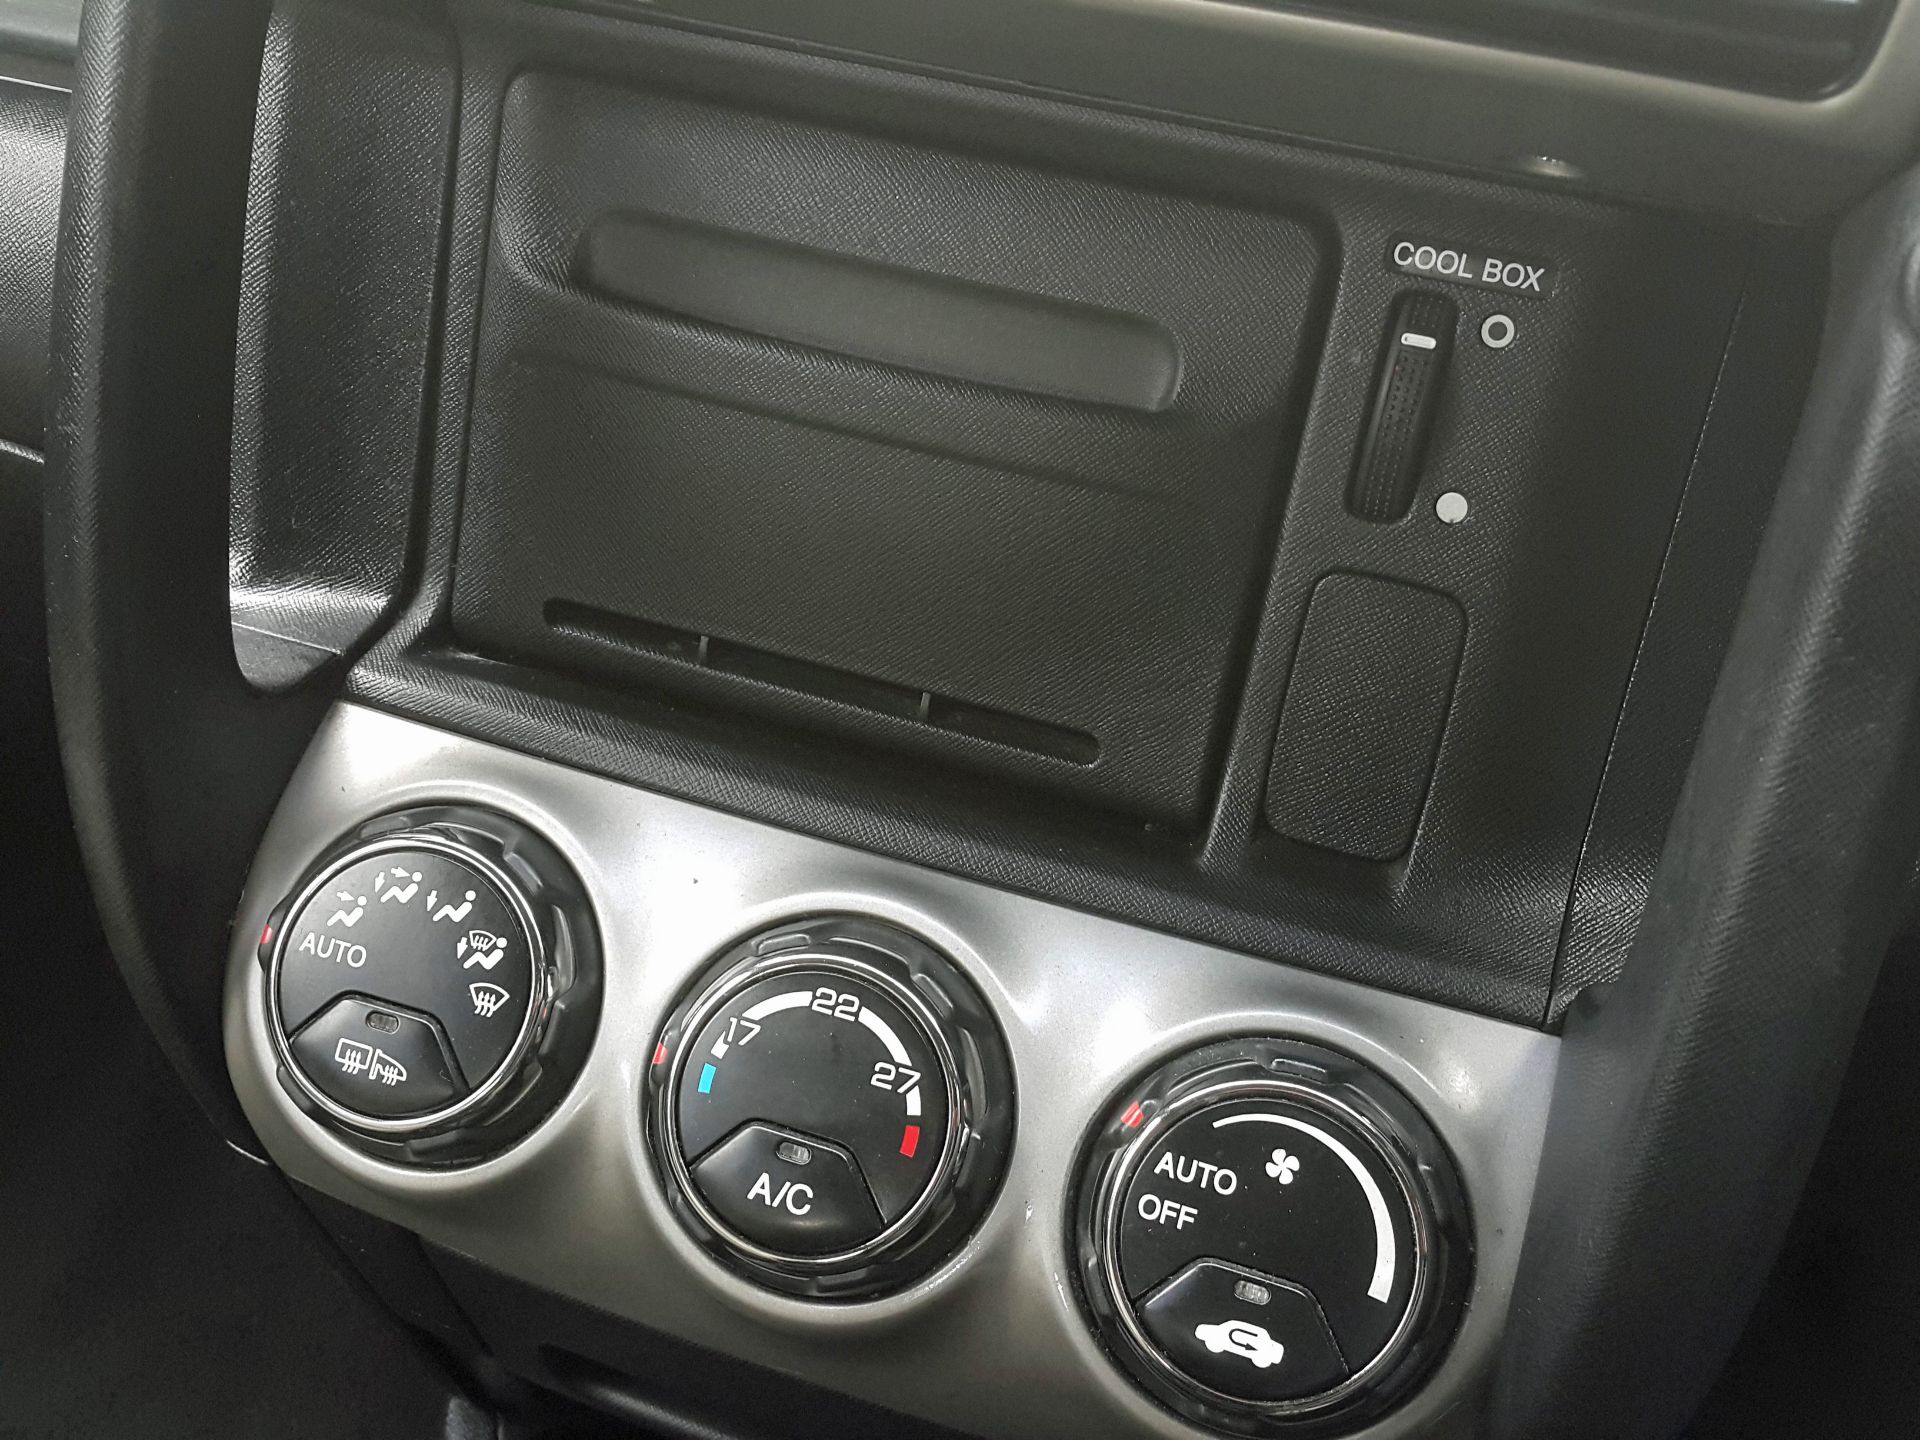 Honda CRV 2.2i CDTI Executive - 4x4, Manual, Diesel, 135000 Miles, MOT'd Until Sep 2018 - Image 16 of 20